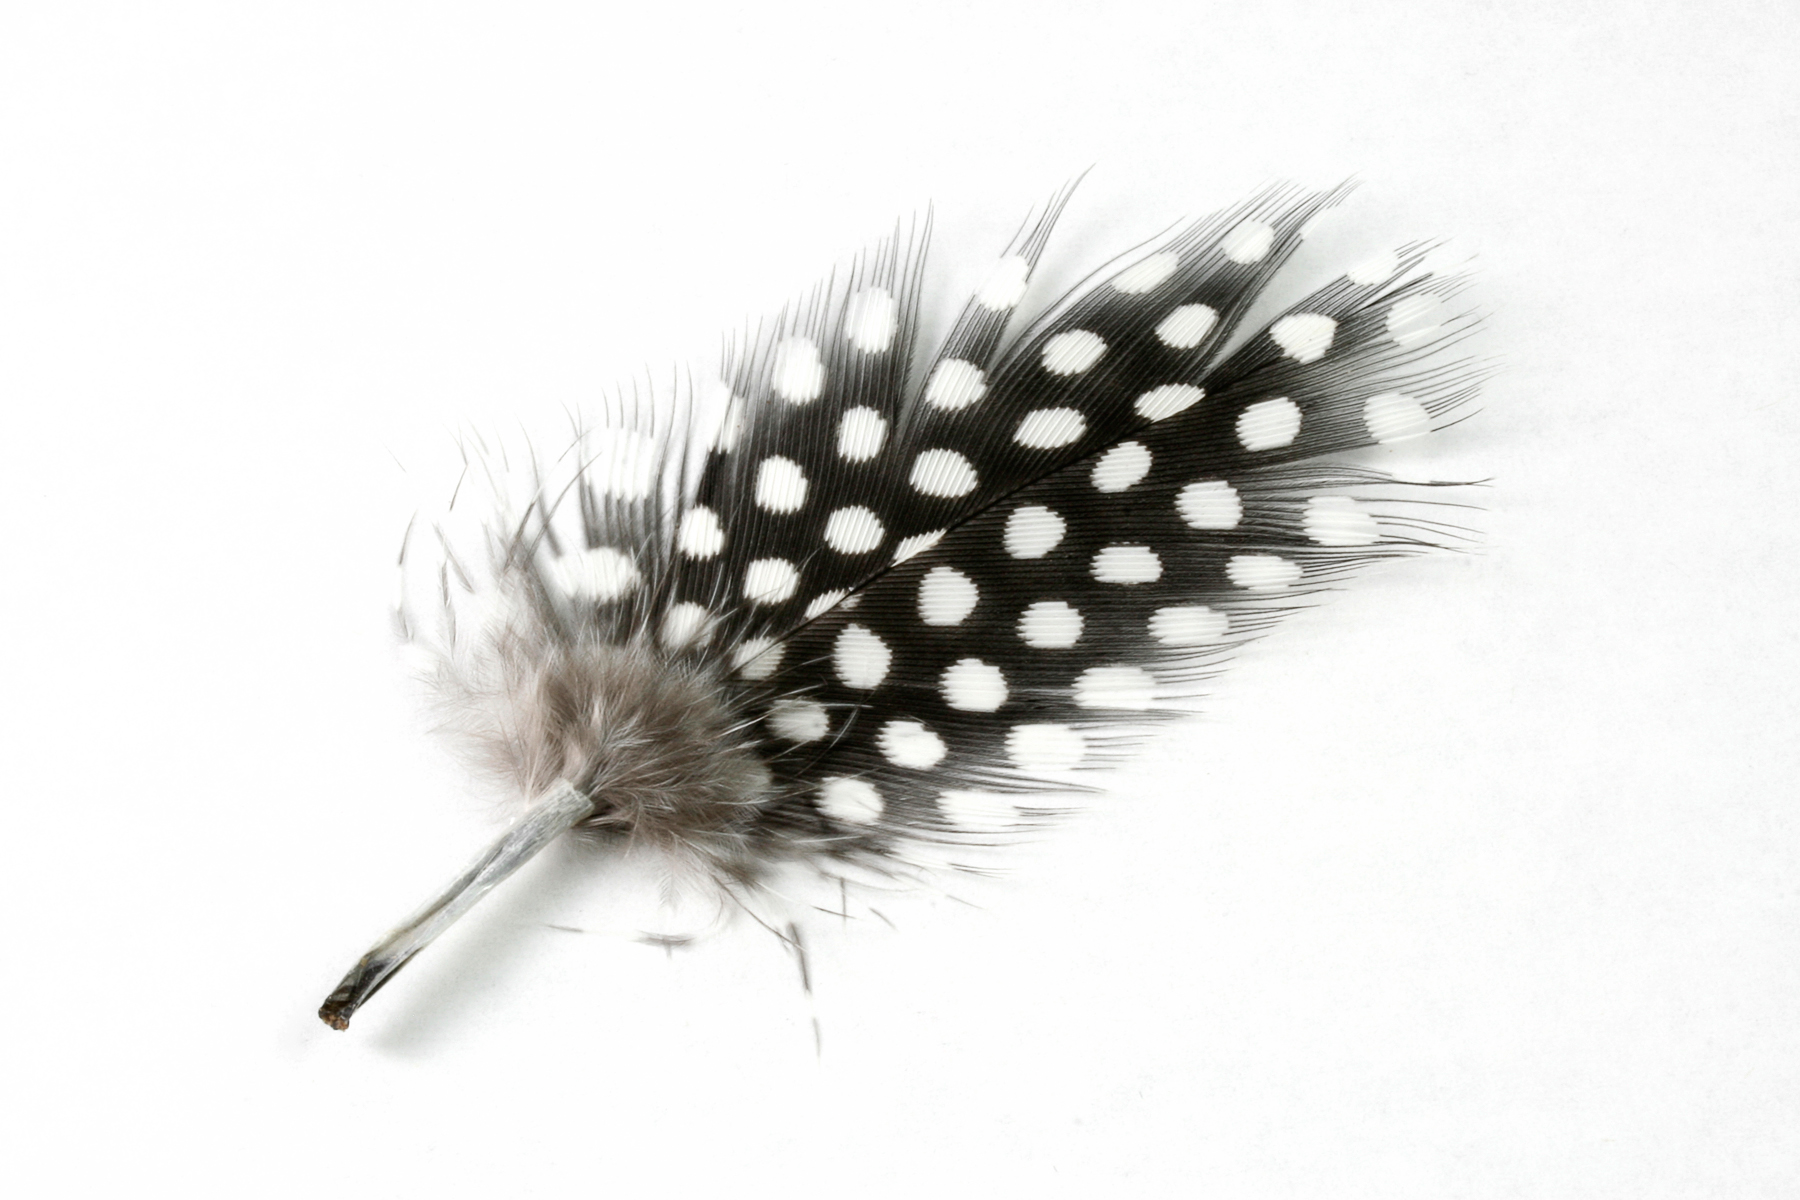 Polkadot feather close-up photo